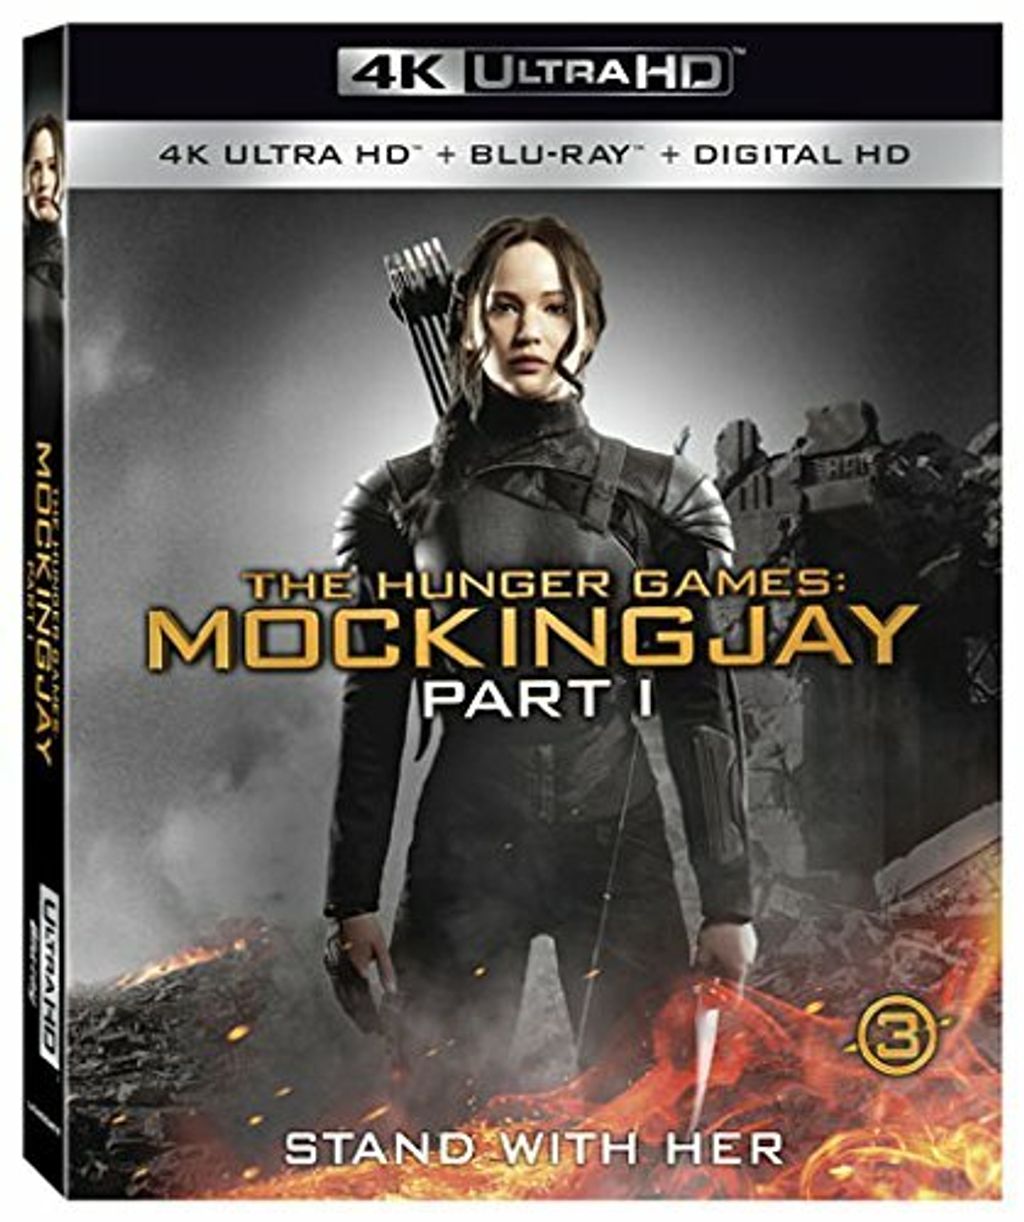 THE HUNGER GAMES Mockingjay Part 1 [4K UHD] [Blu-ray] [Region Free] 2-DISCS.jpg